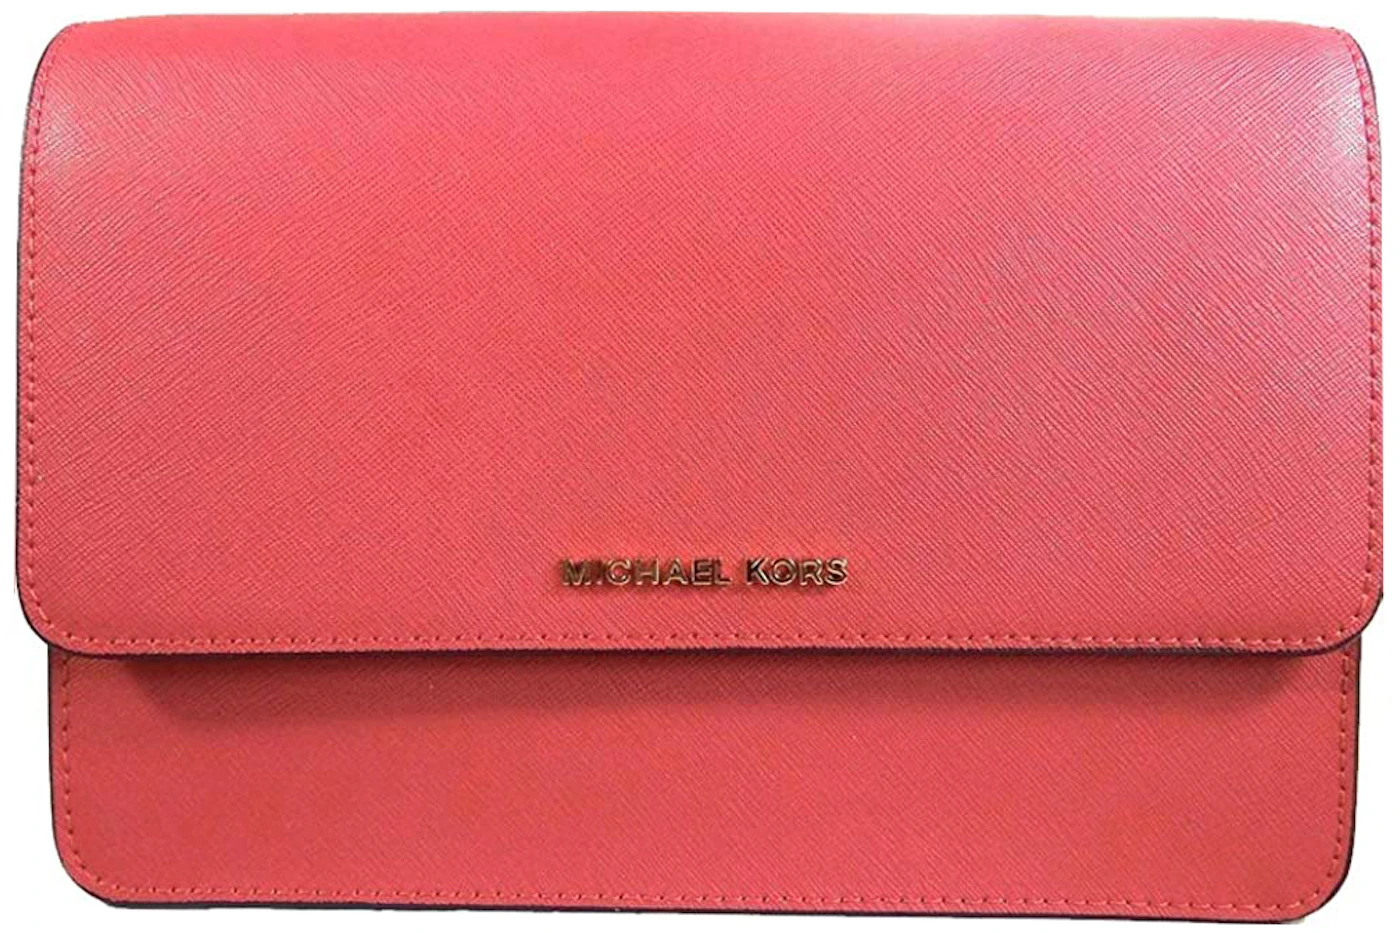 Michael Kors Gusset Crossbody Bag Large Rose Pink in PVC/Leather